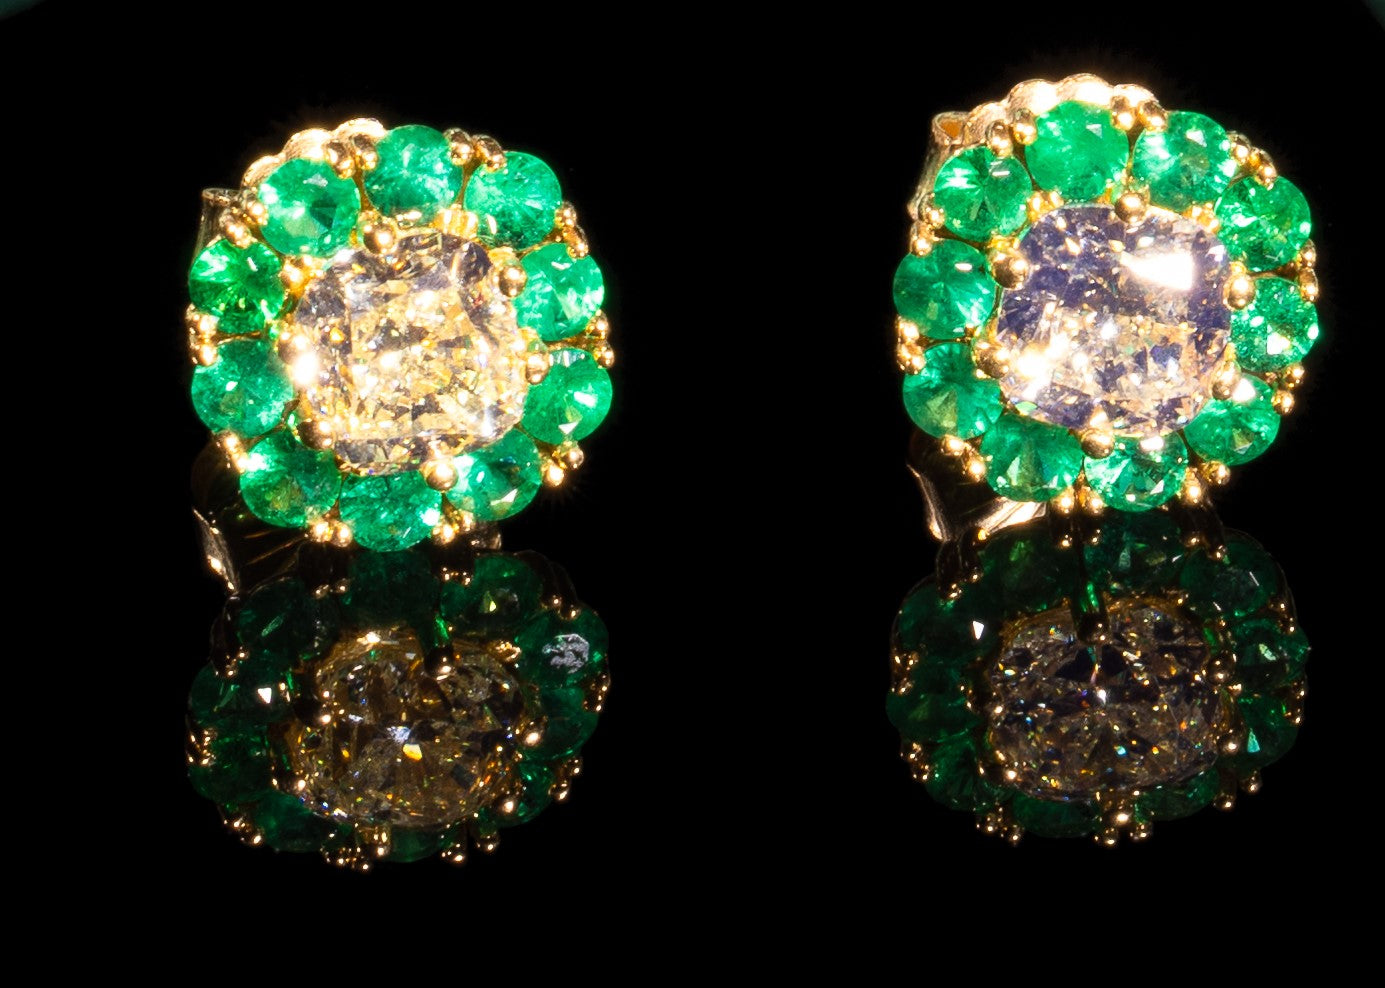 18KY Diamond Earrings with Emerald Halos